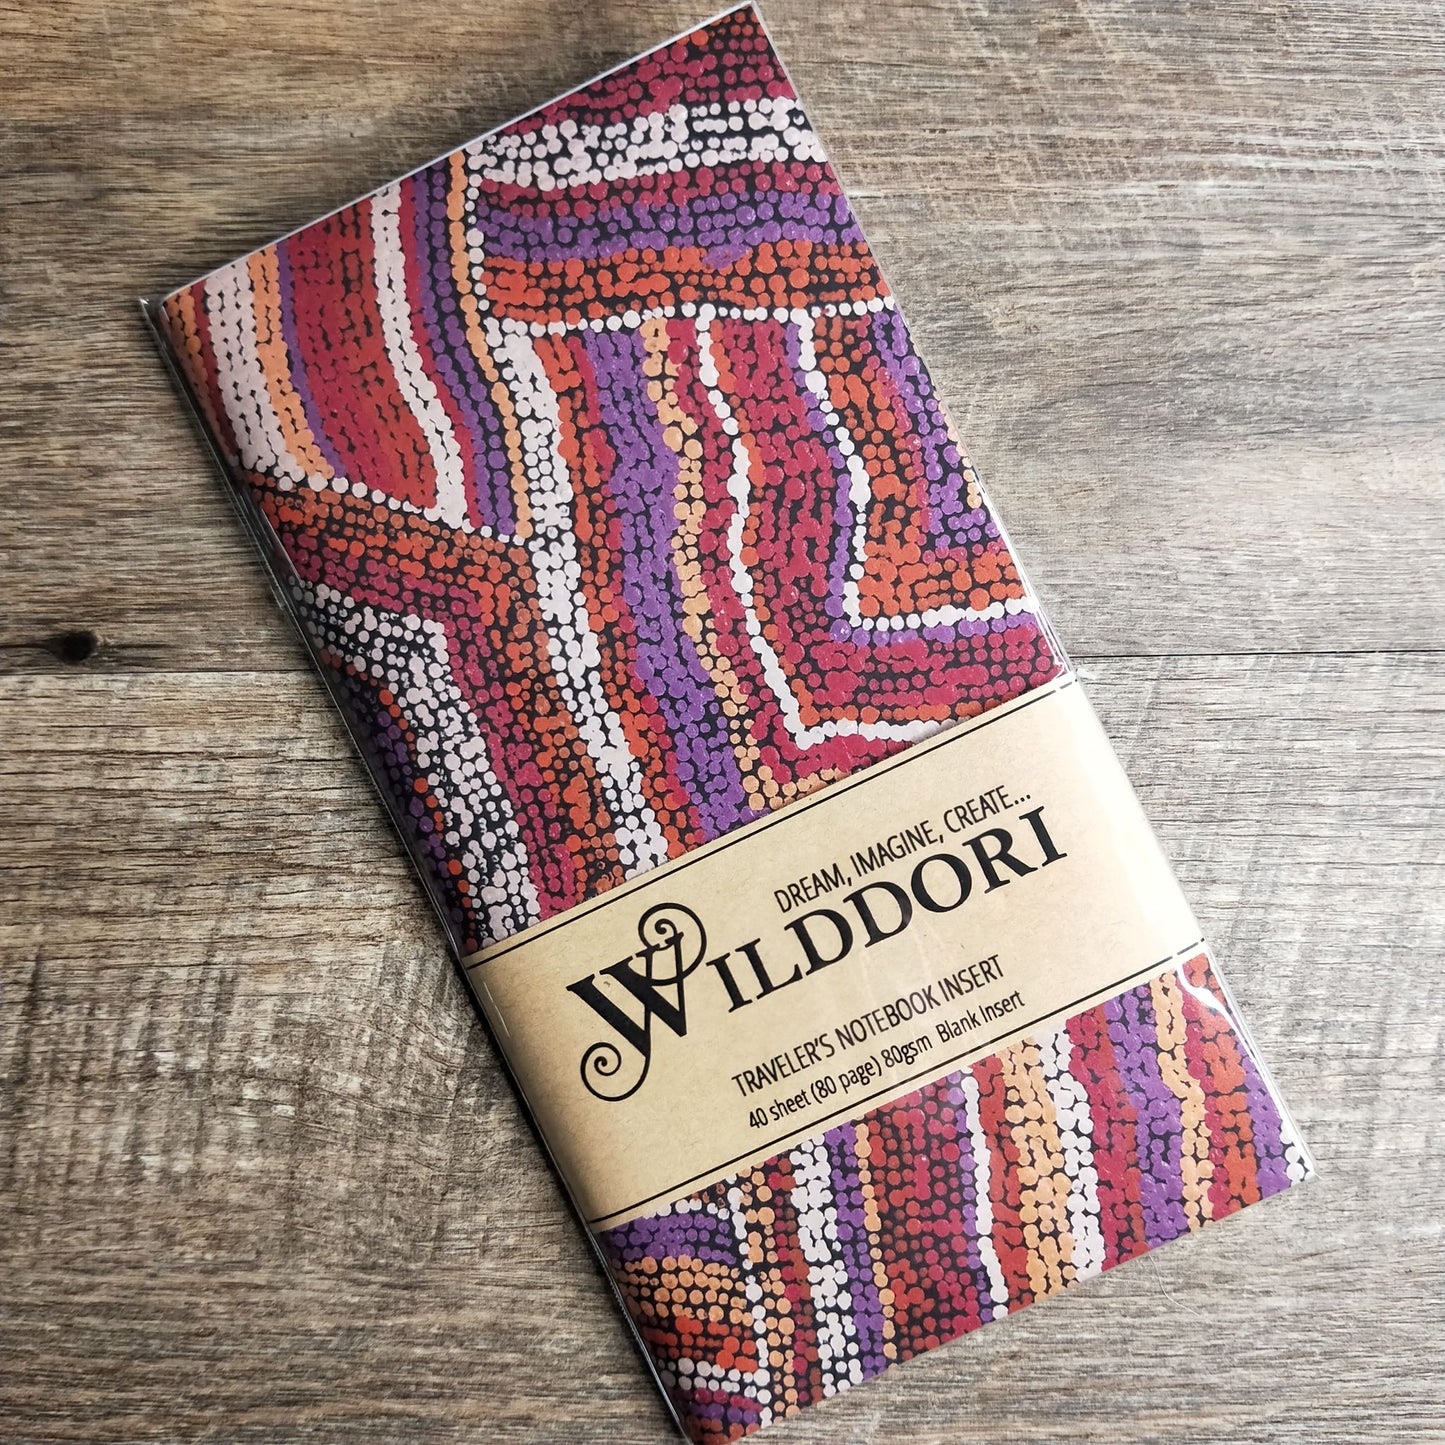 Wilddori 40 sheet Blank Insert - Australian Indigenous Design 6